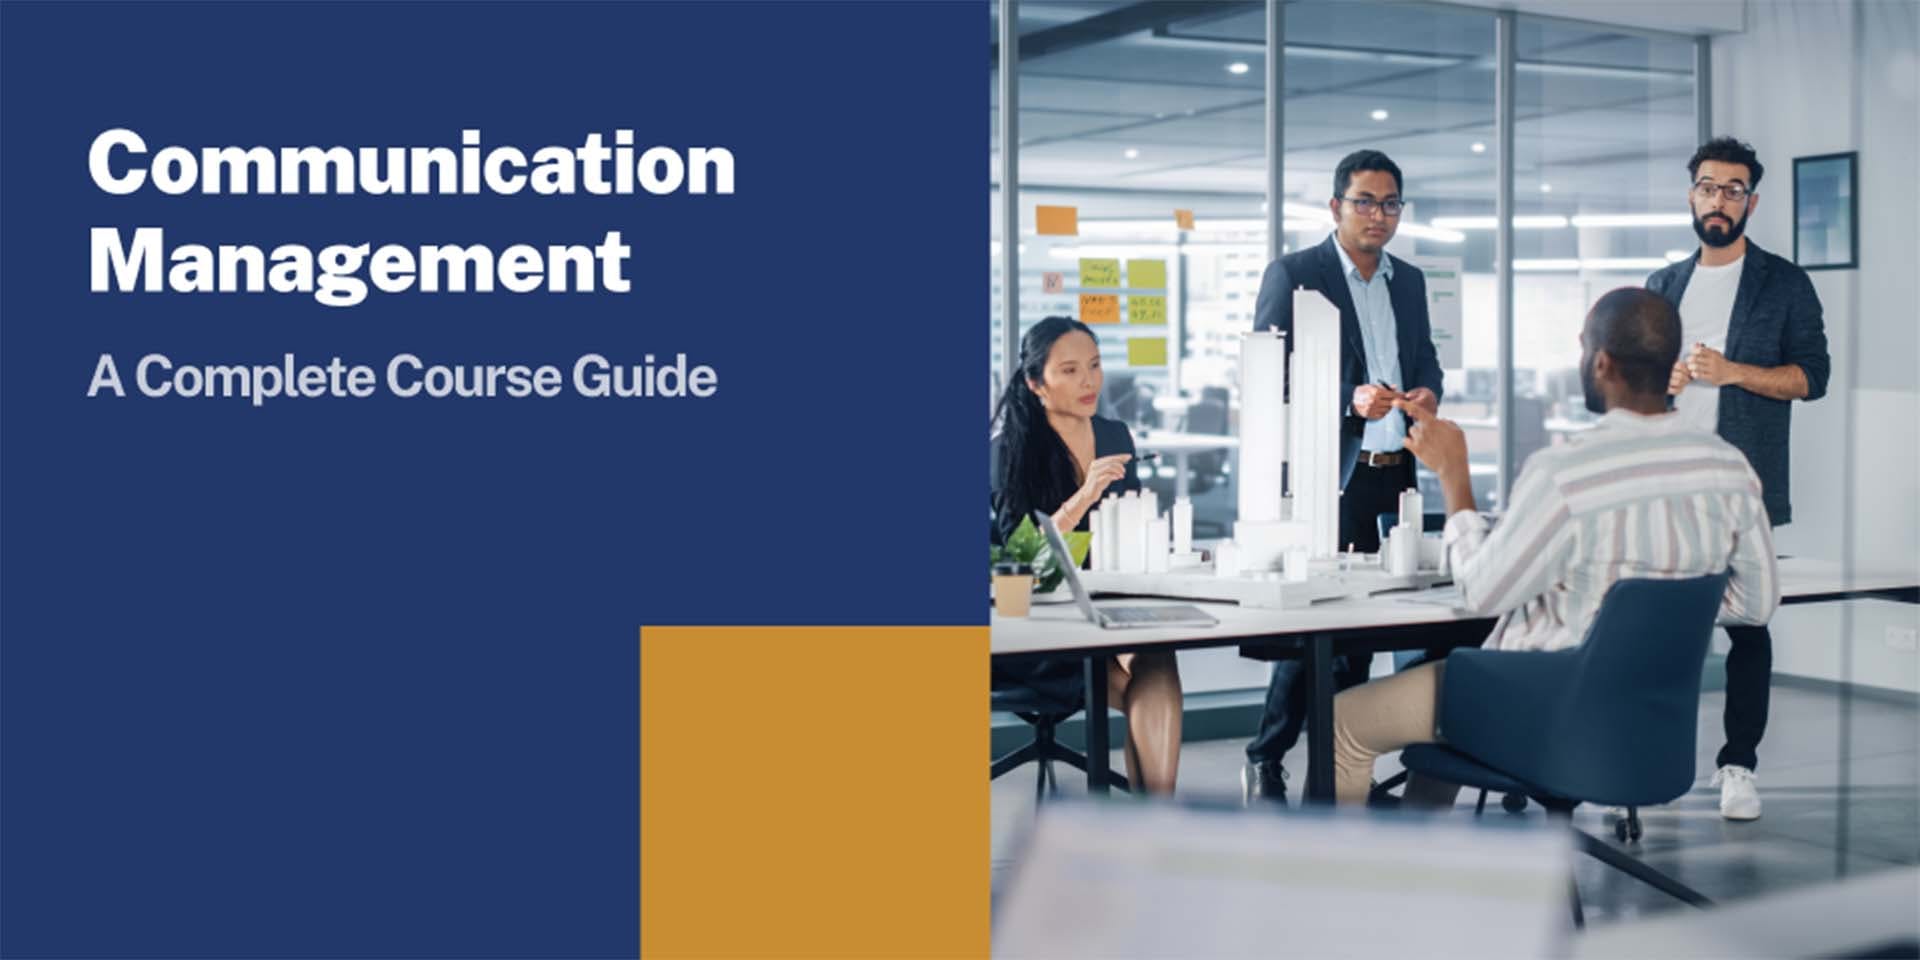 Communication Management: A Complete Course Guide